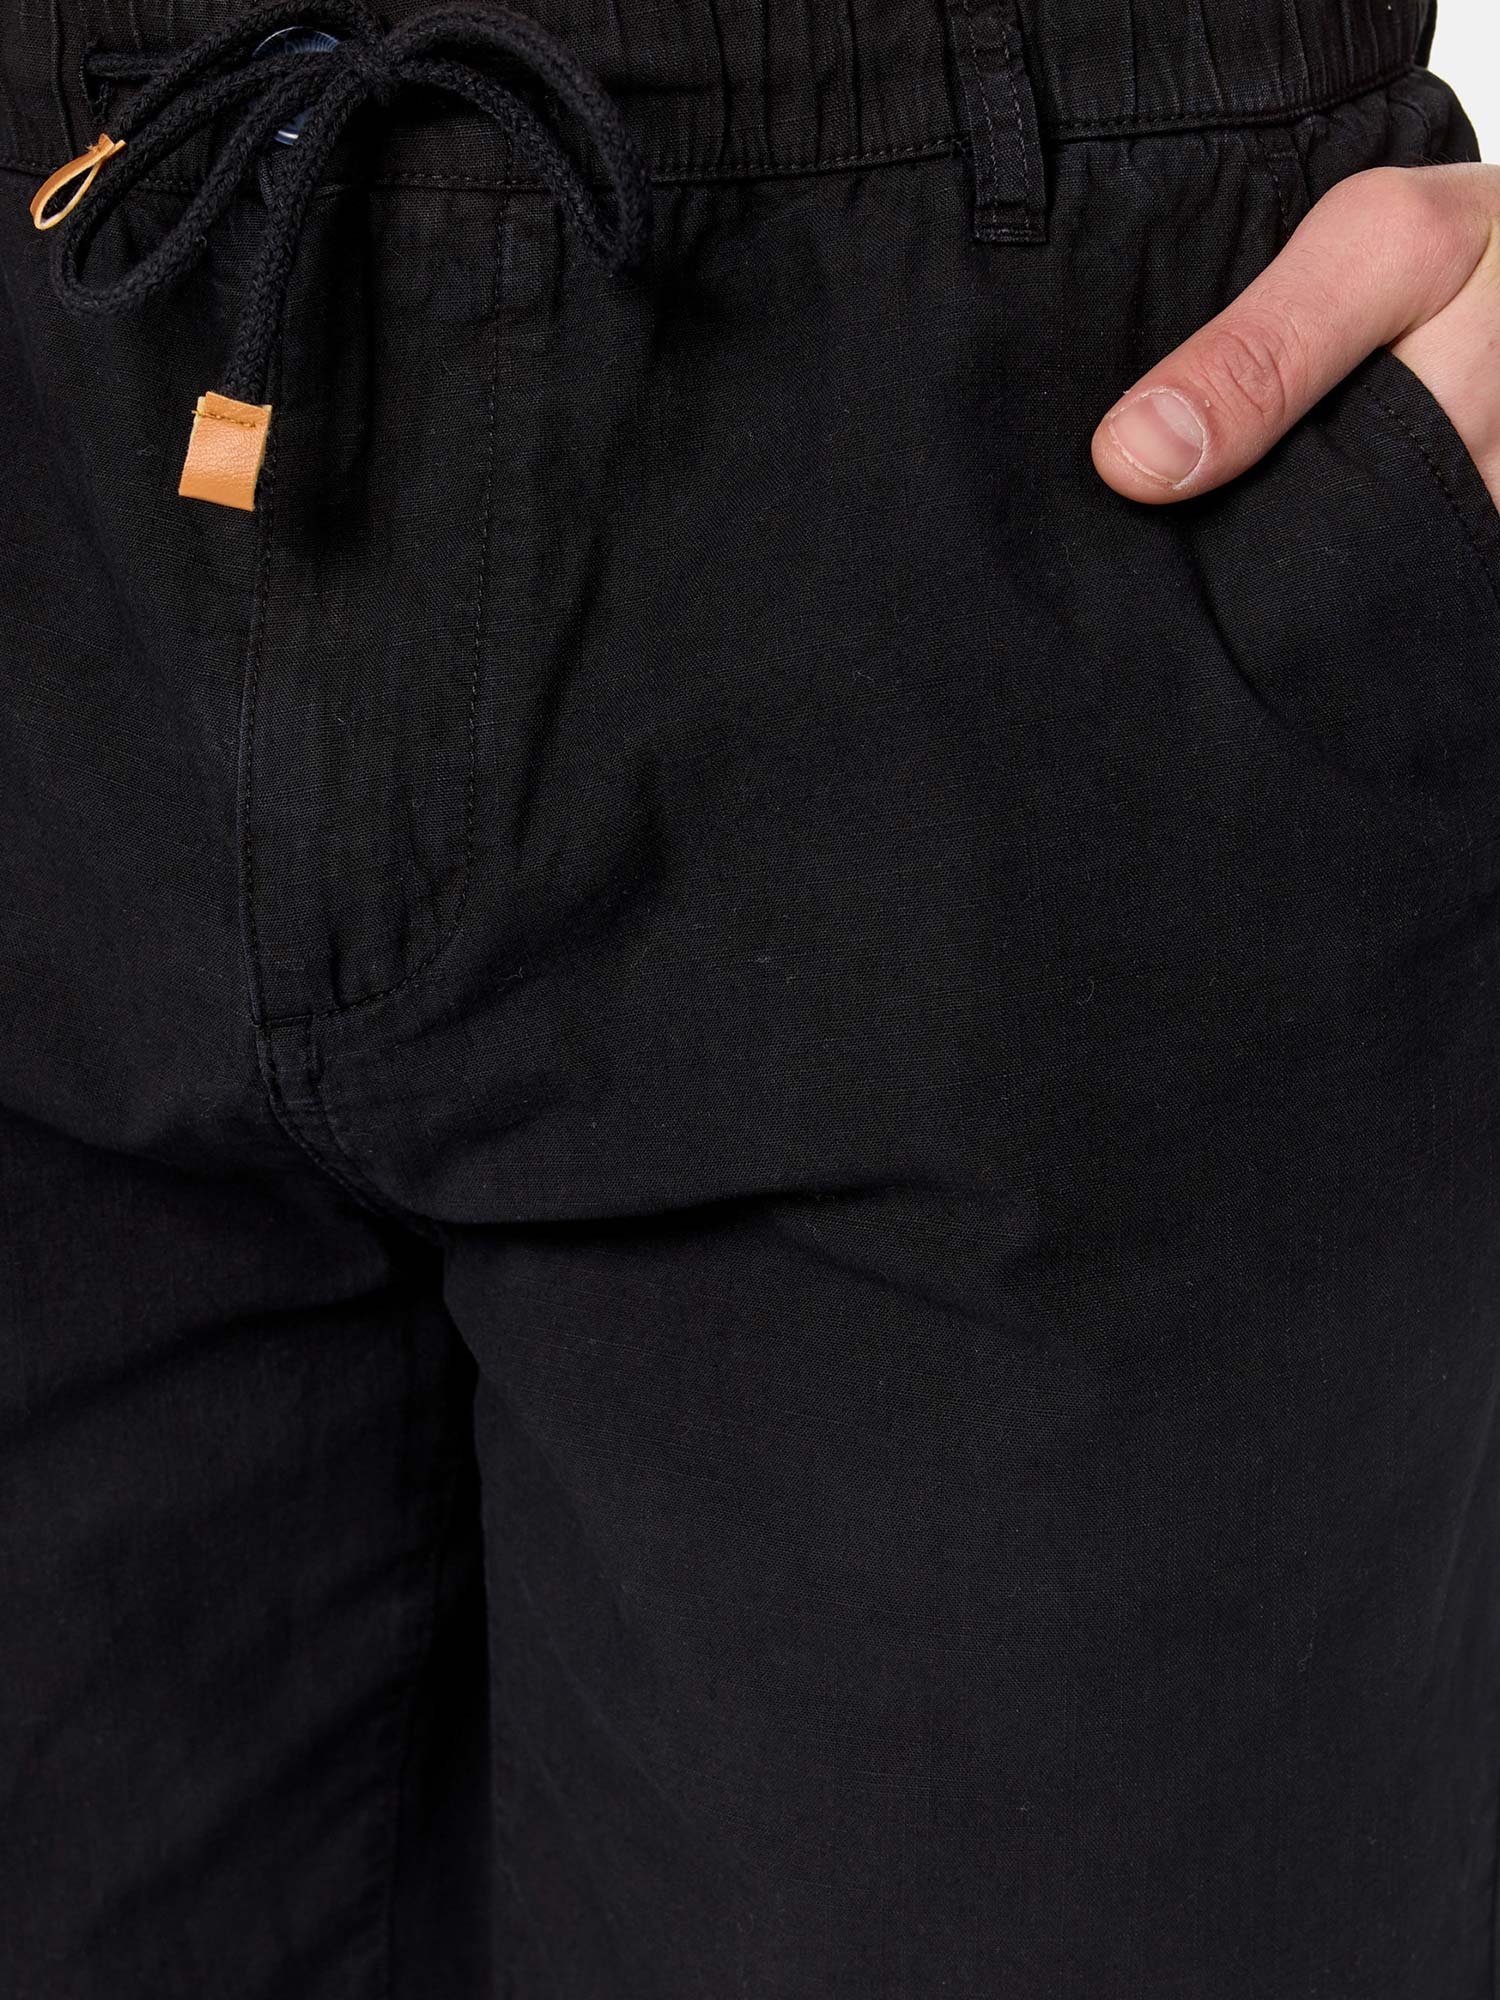 schwarz Hose in & A205 moderne Leinen-Optik zeitlose Shorts kurze Tazzio